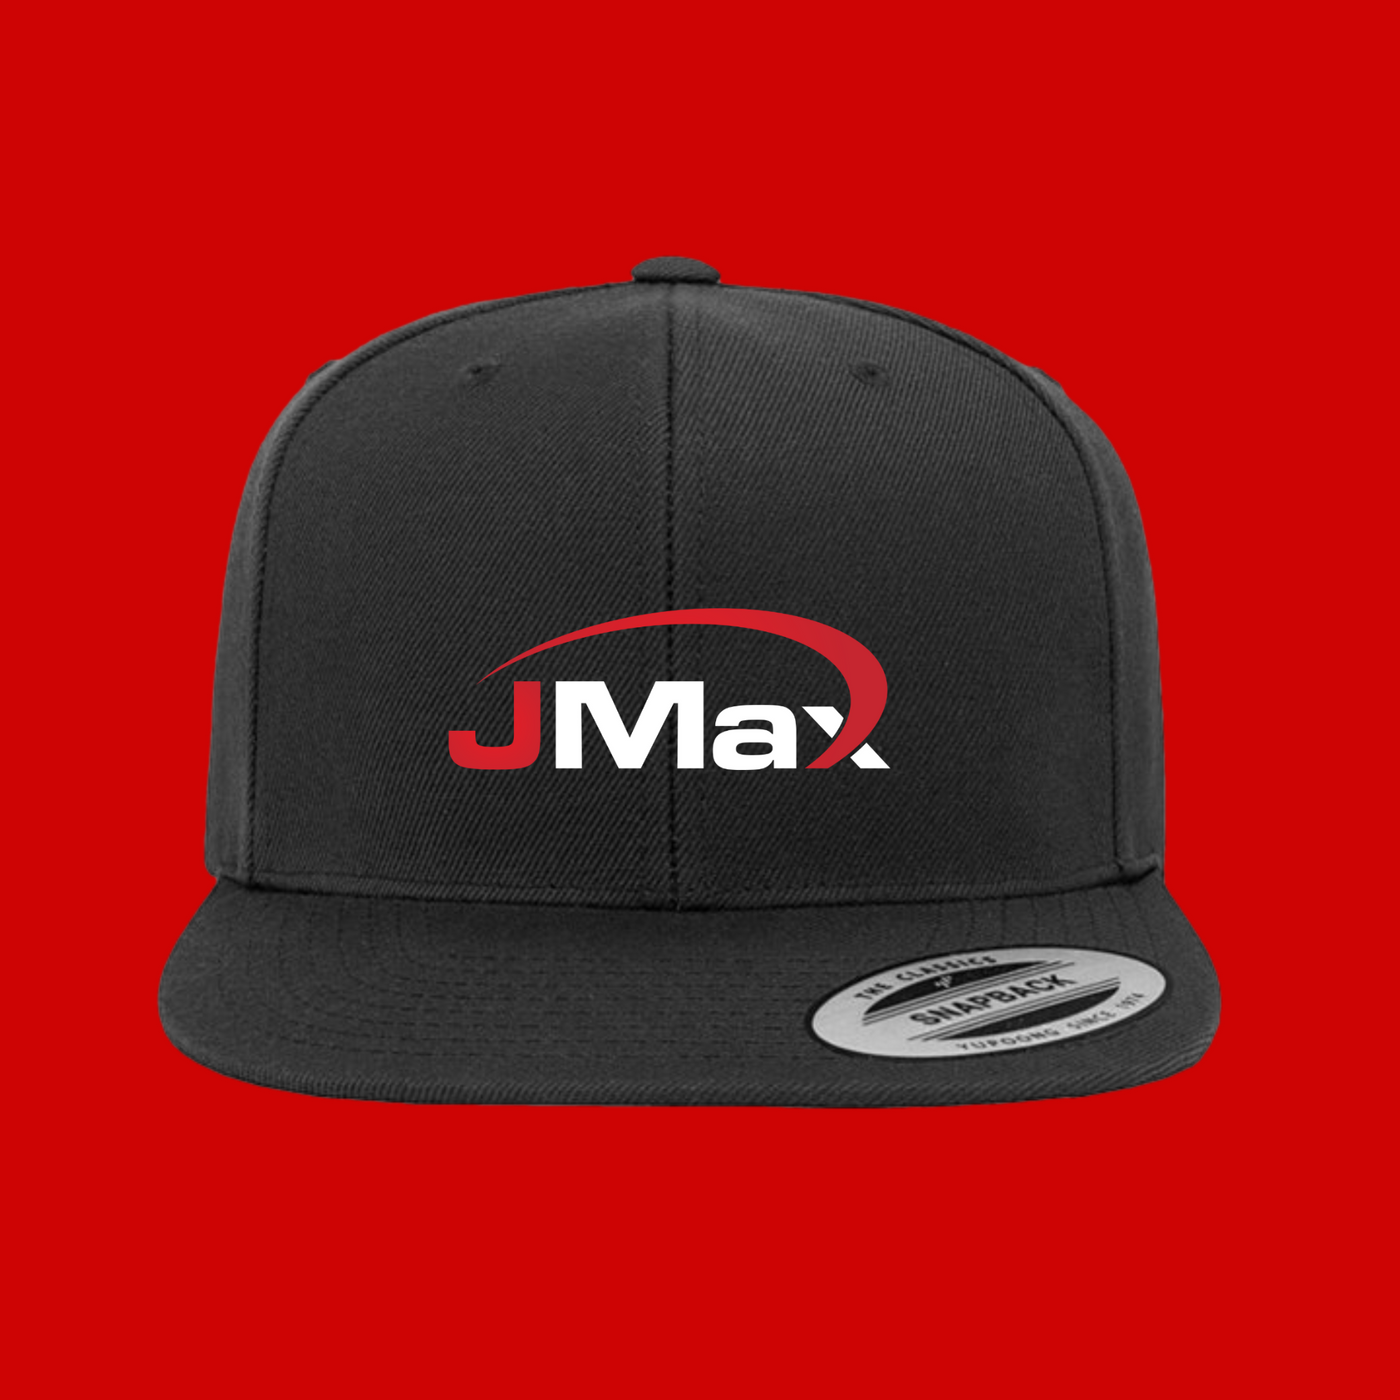 JMax 01 Hat Black Snapback